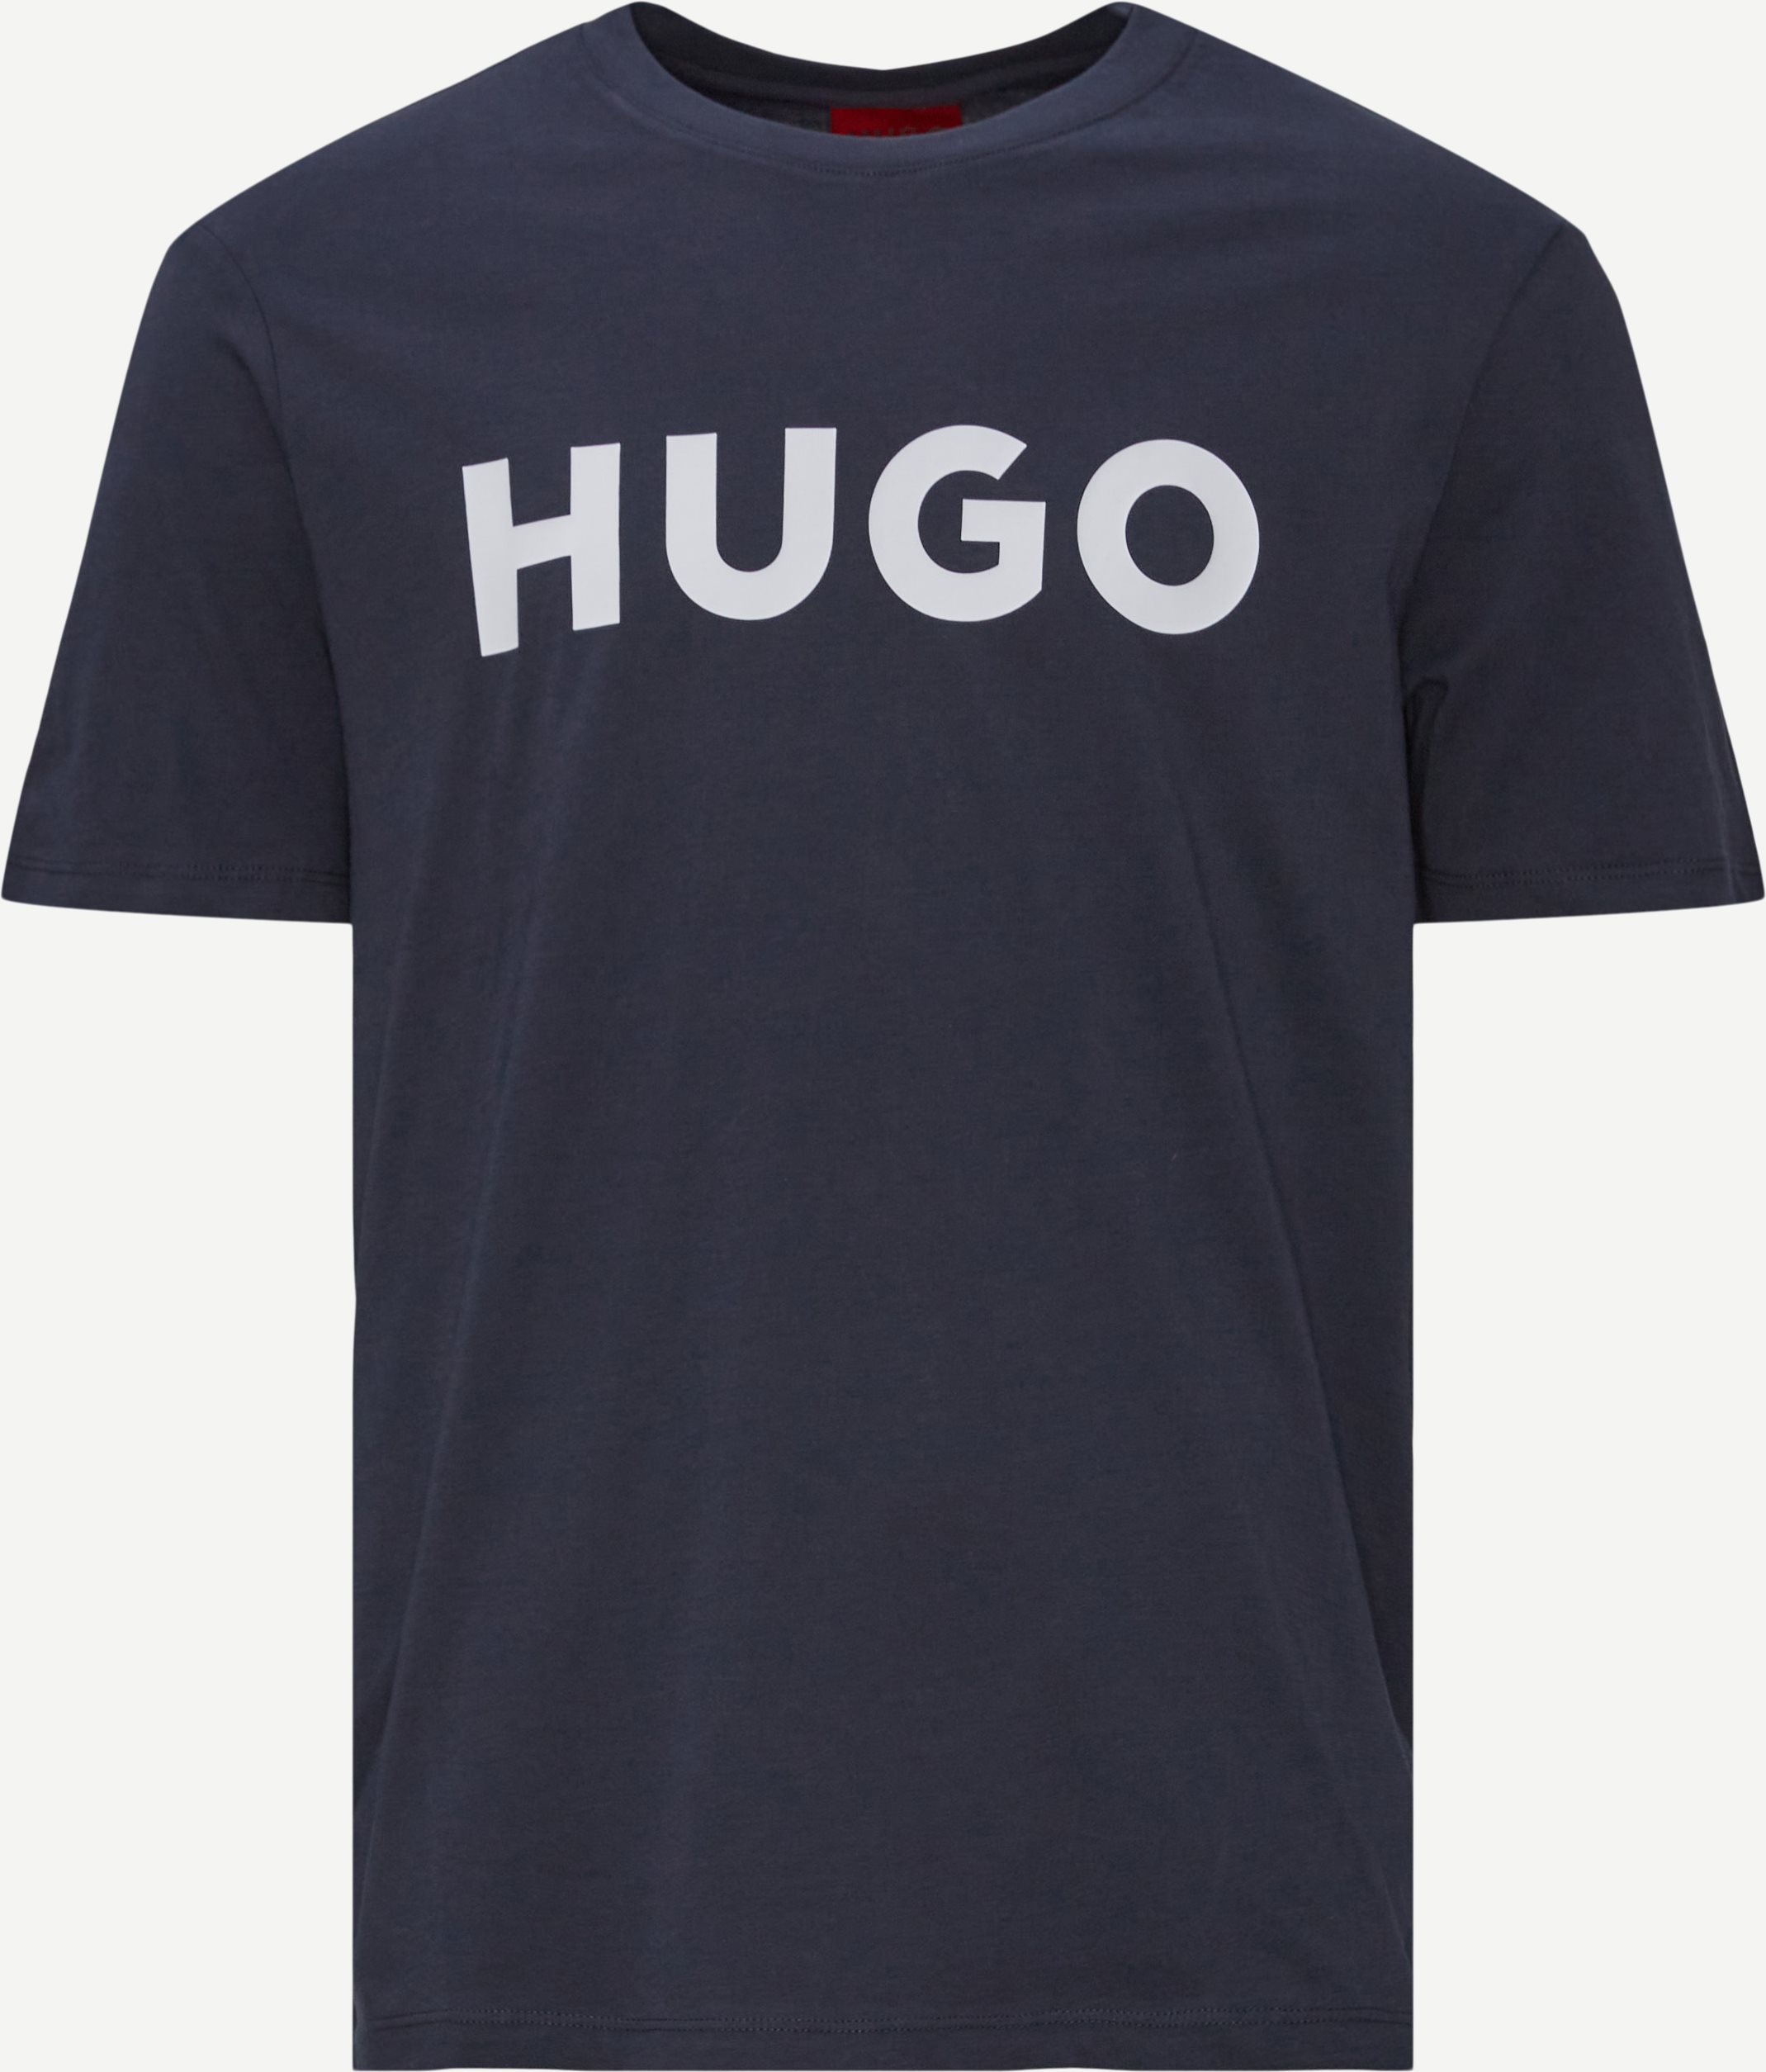 HUGO - Buy HUGO fashion for men online at Kaufmann